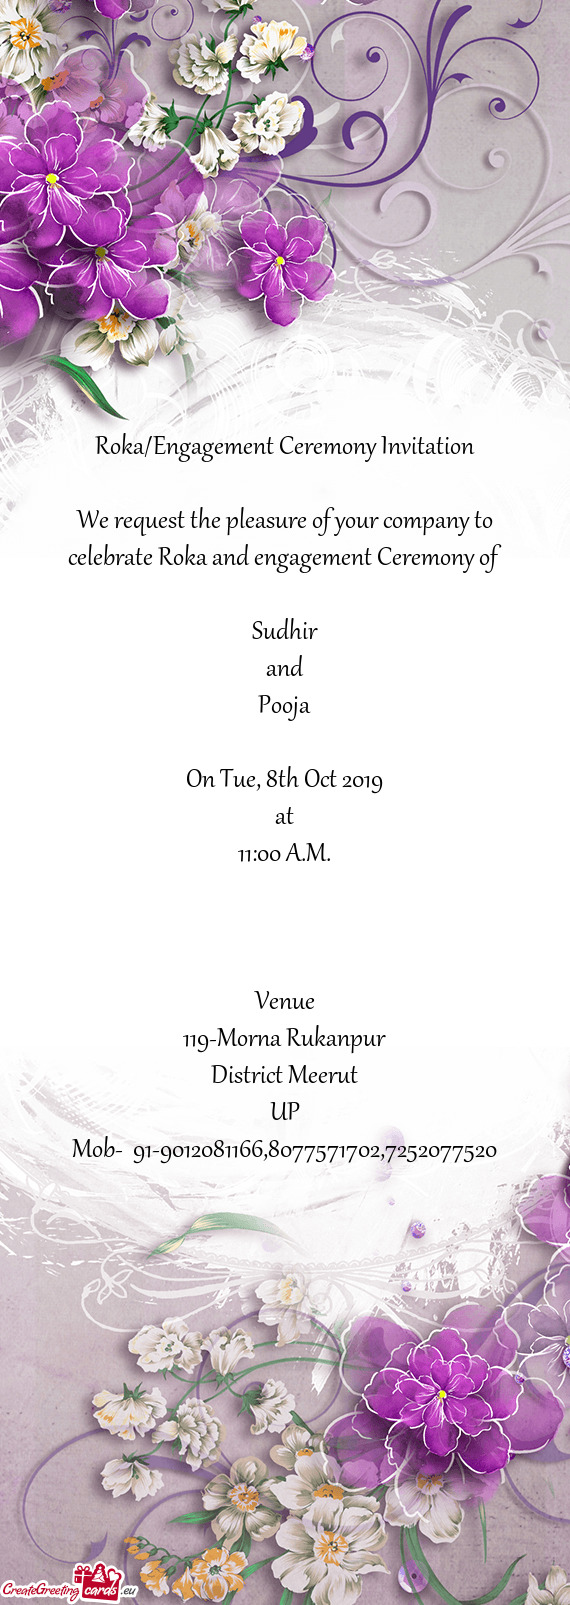 Roka/Engagement Ceremony Invitation